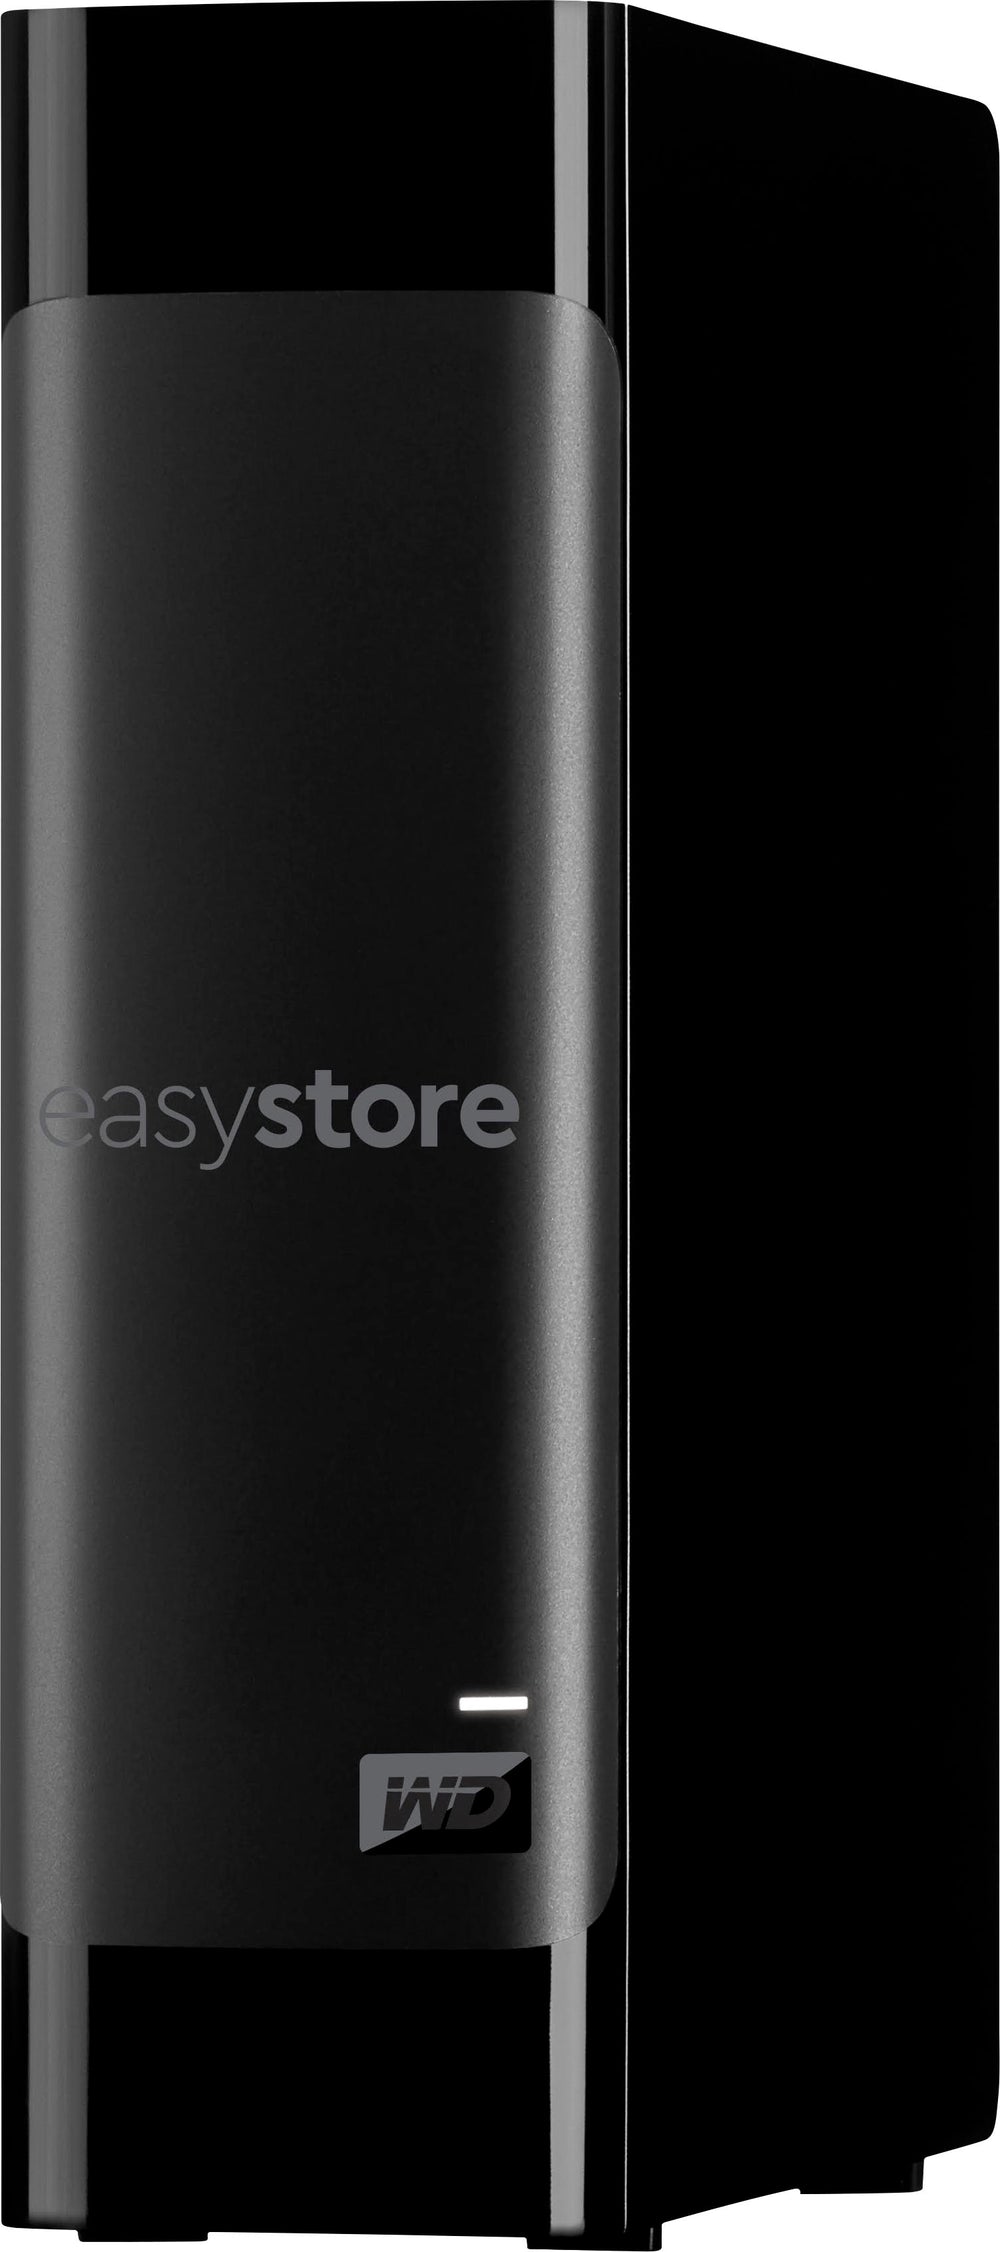 WD - easystore 20TB External USB 3.0 Hard Drive - Black_1